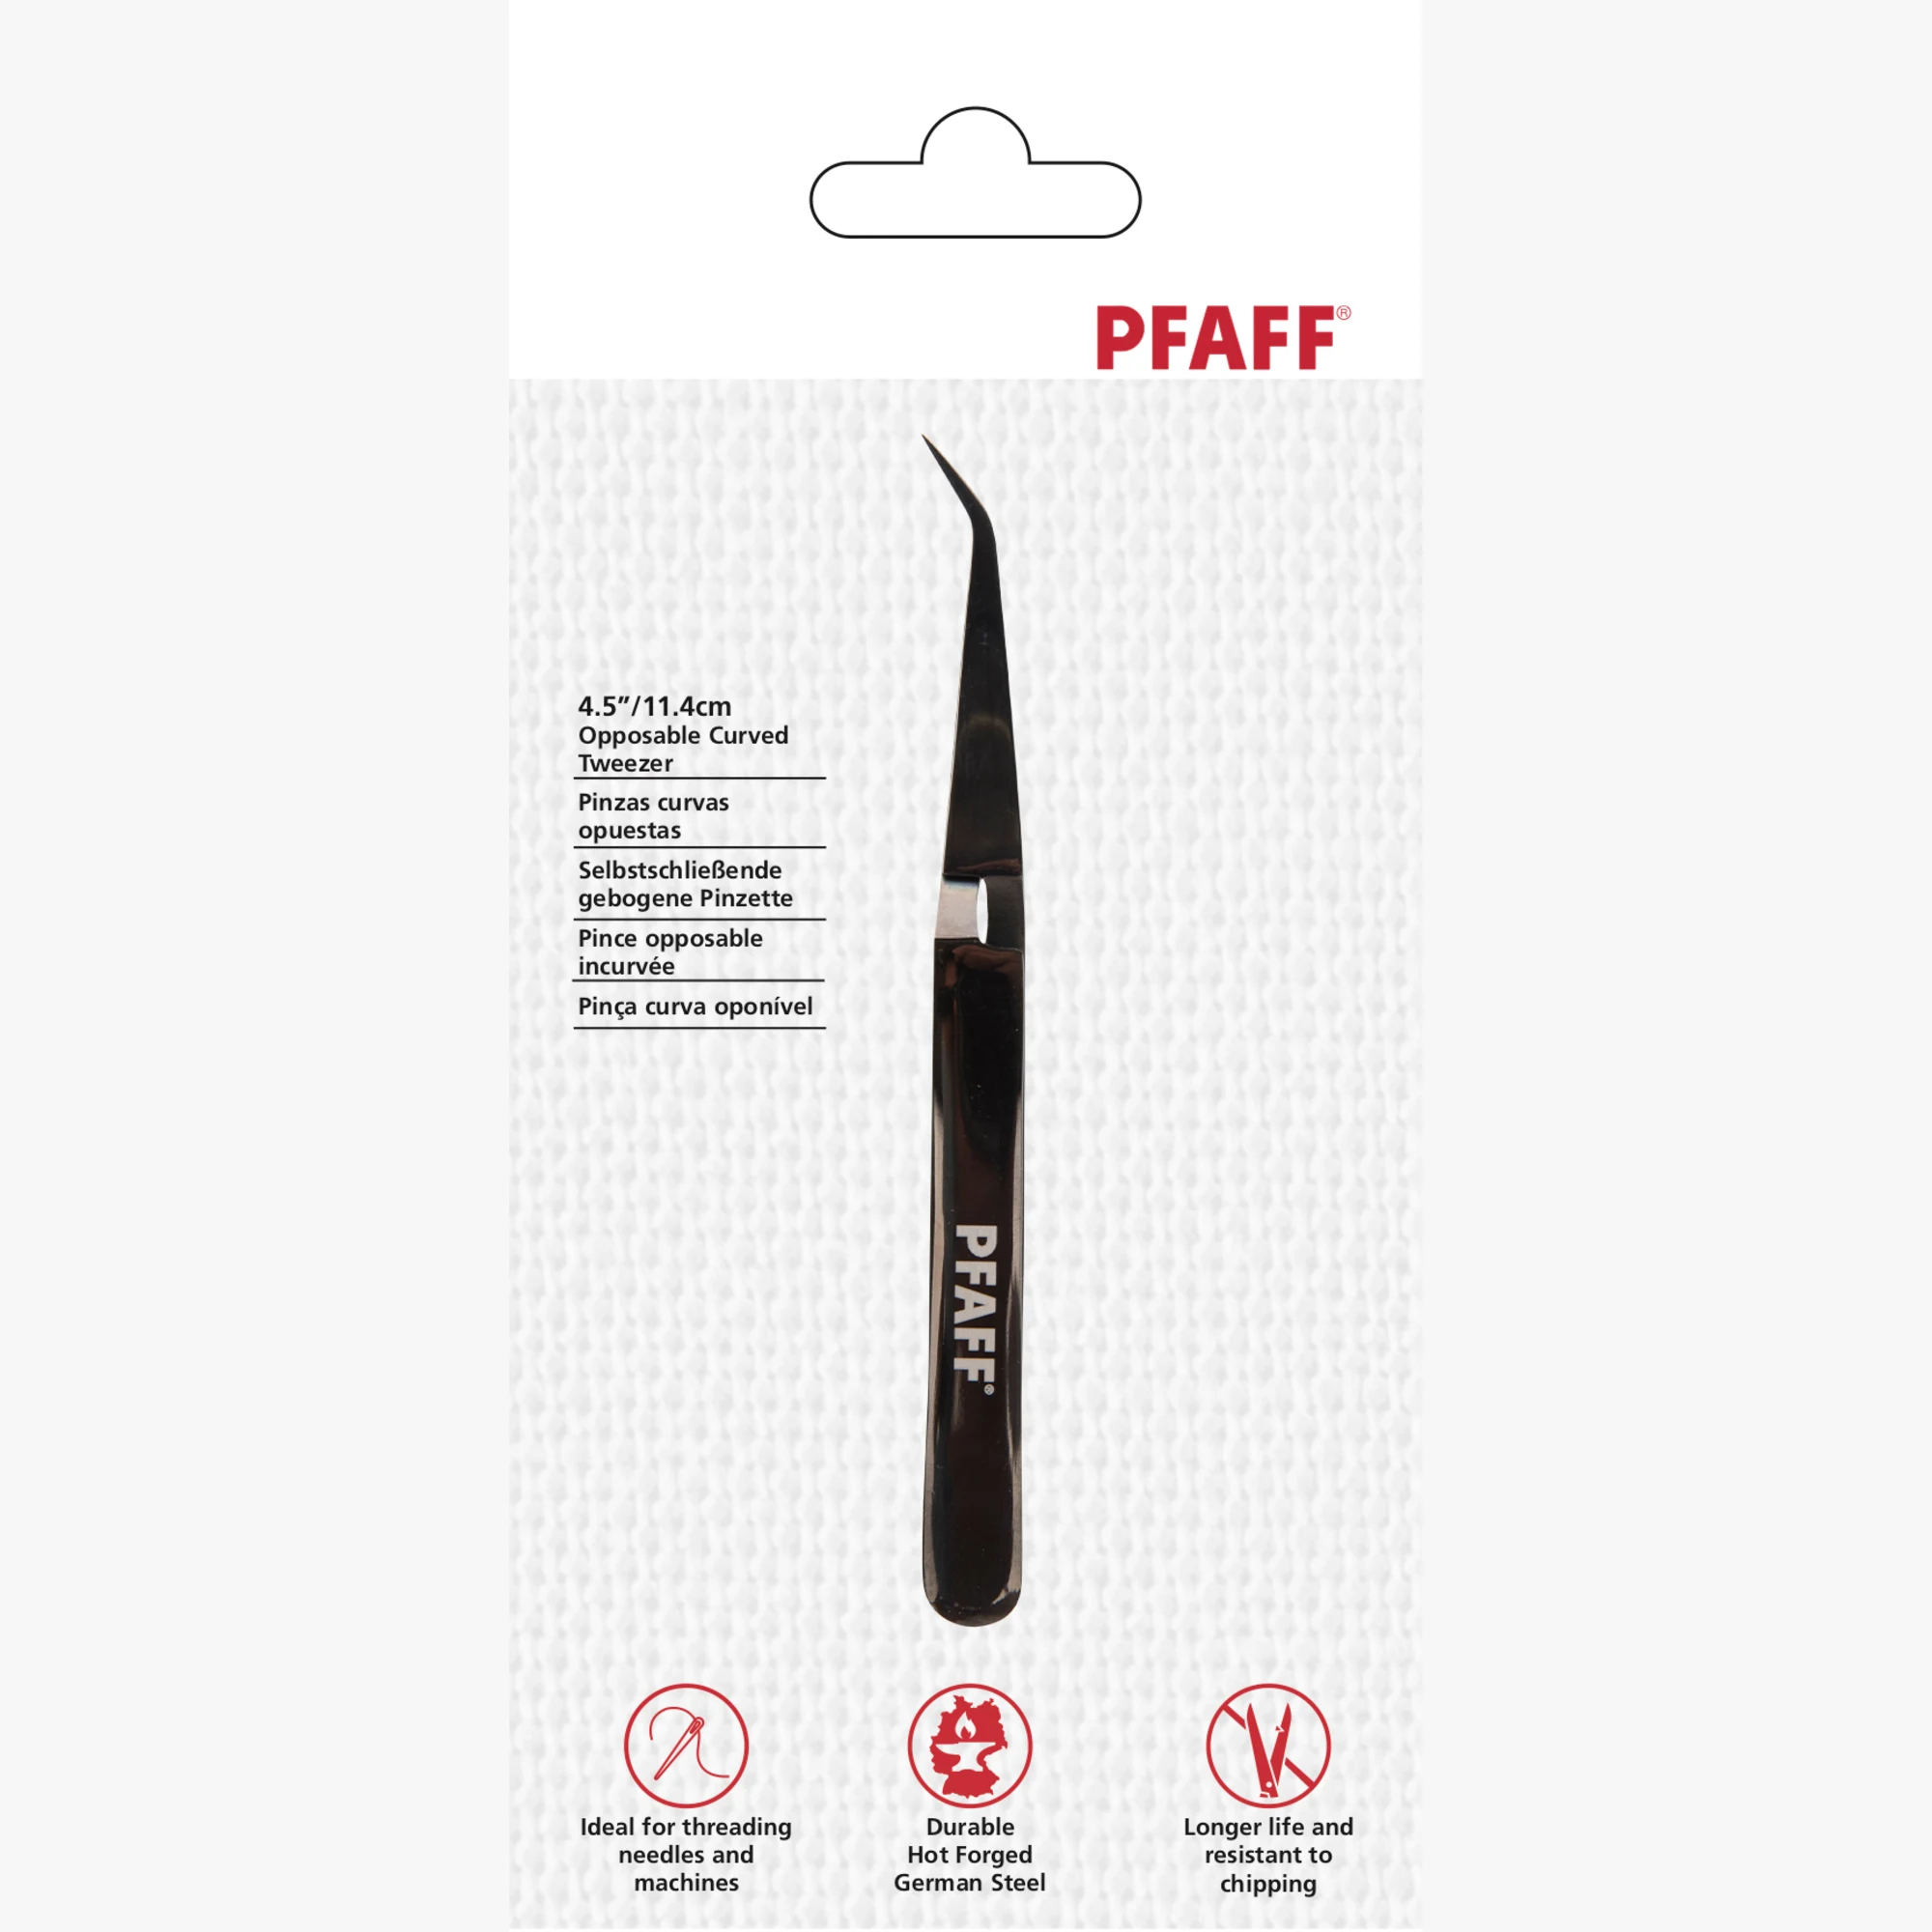 Pfaff Pfaff 4.5"/11.4cm opposable curved tweezer